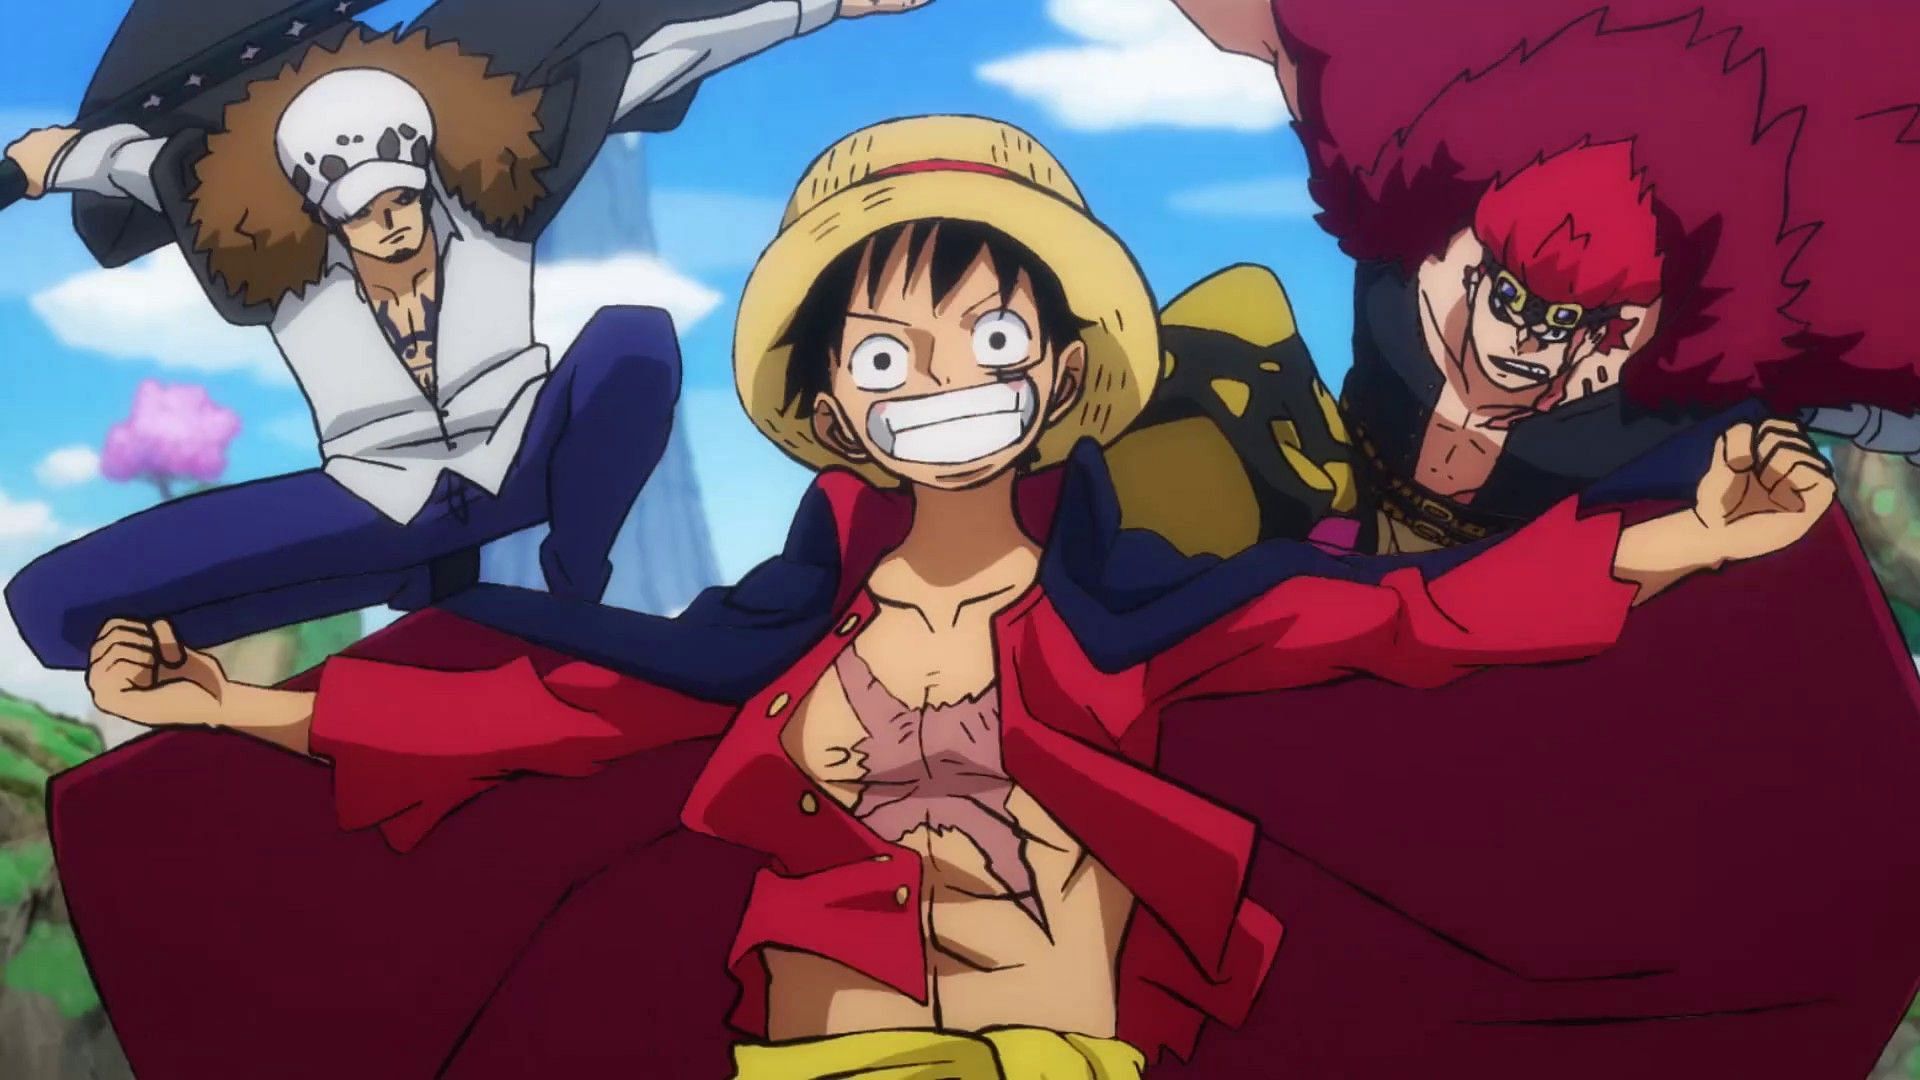 Law, Luffy, and Kid take center stage in One Piece Episode 1015 (Image Credits: Eiichiro Oda/Shueisha, Viz Media, One Piece)